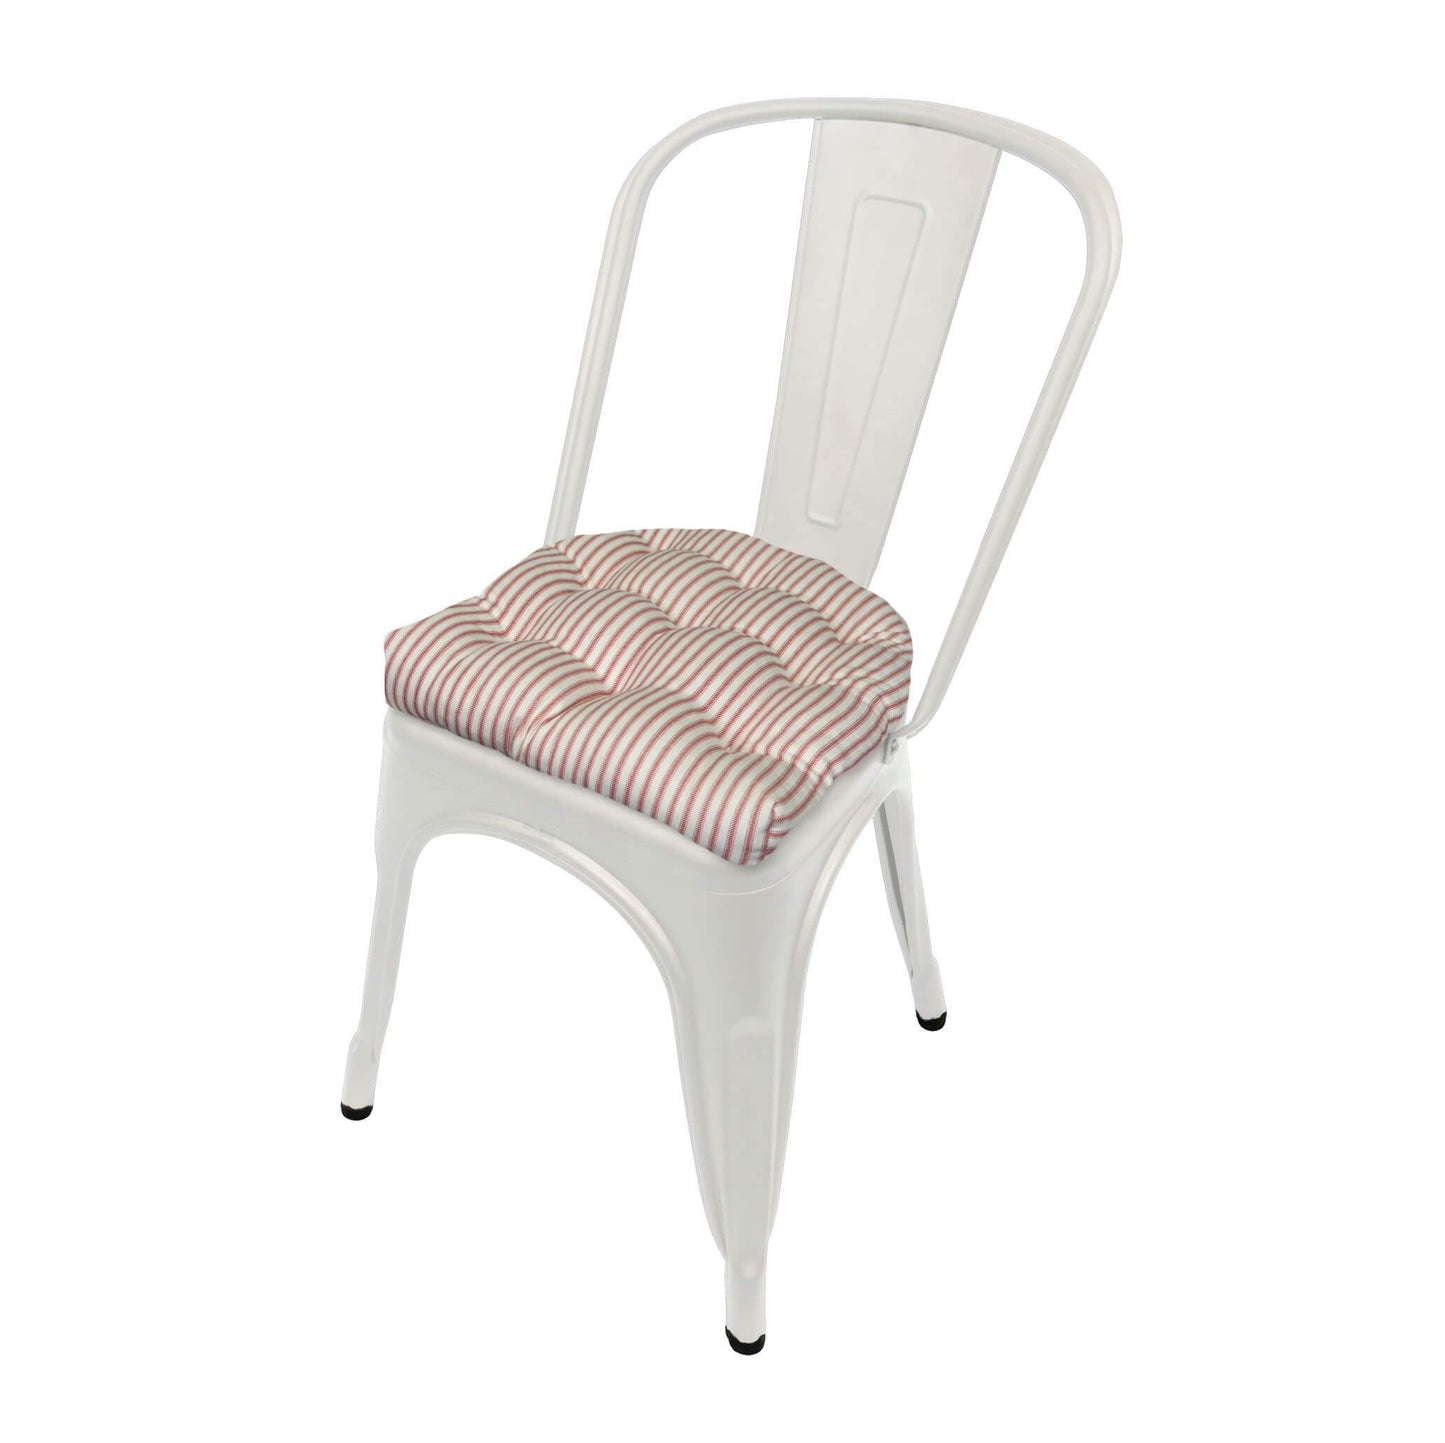 Ticking Stripe Red Tolix Chair Cushion  | Barnett Home Decor